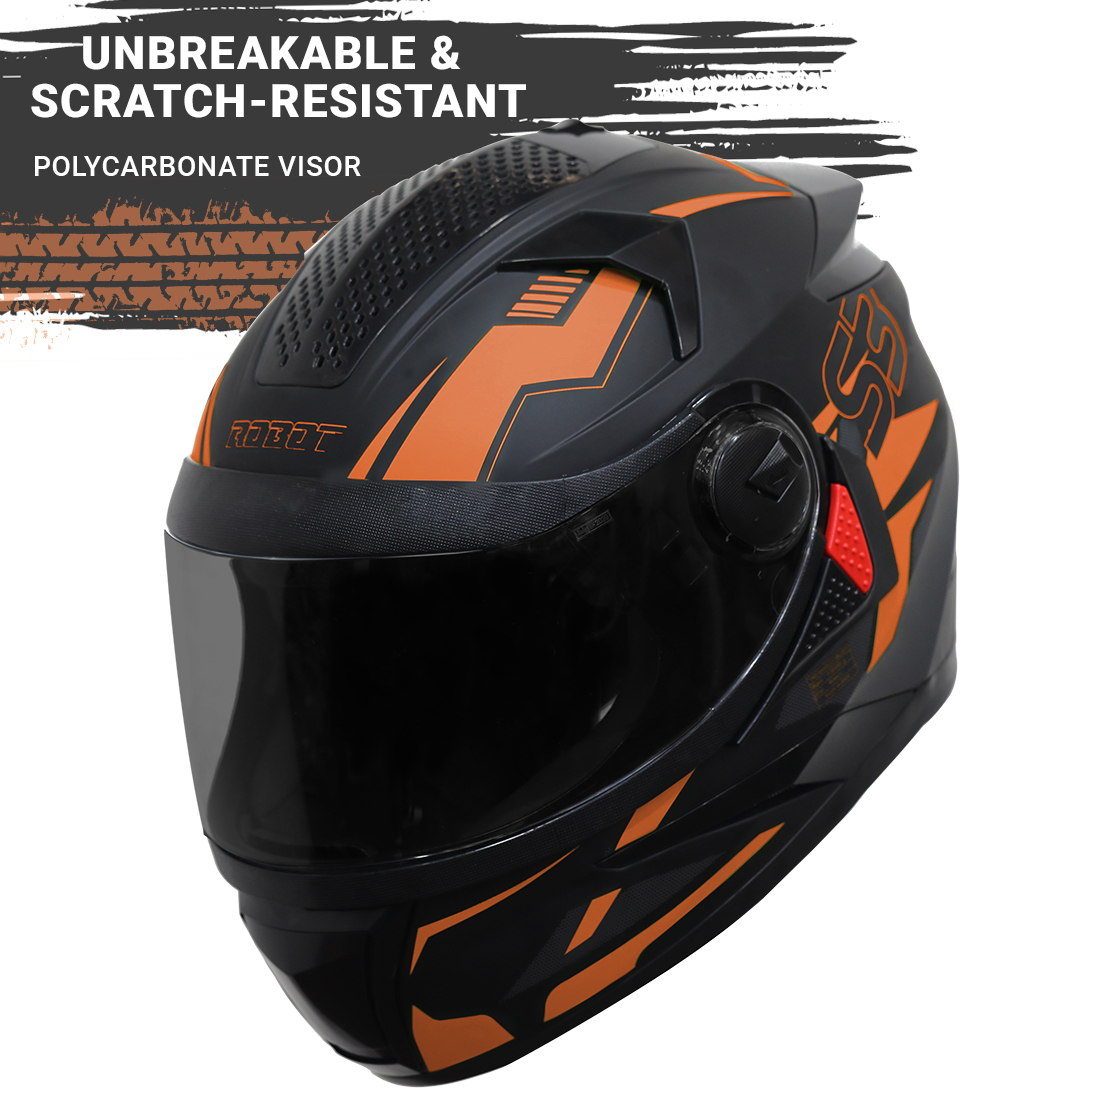 Steelbird SBH-17 Terminator ISI Certified Full Face Graphic Helmet (Matt Black Fluo Light Orange With Smoke Visor)